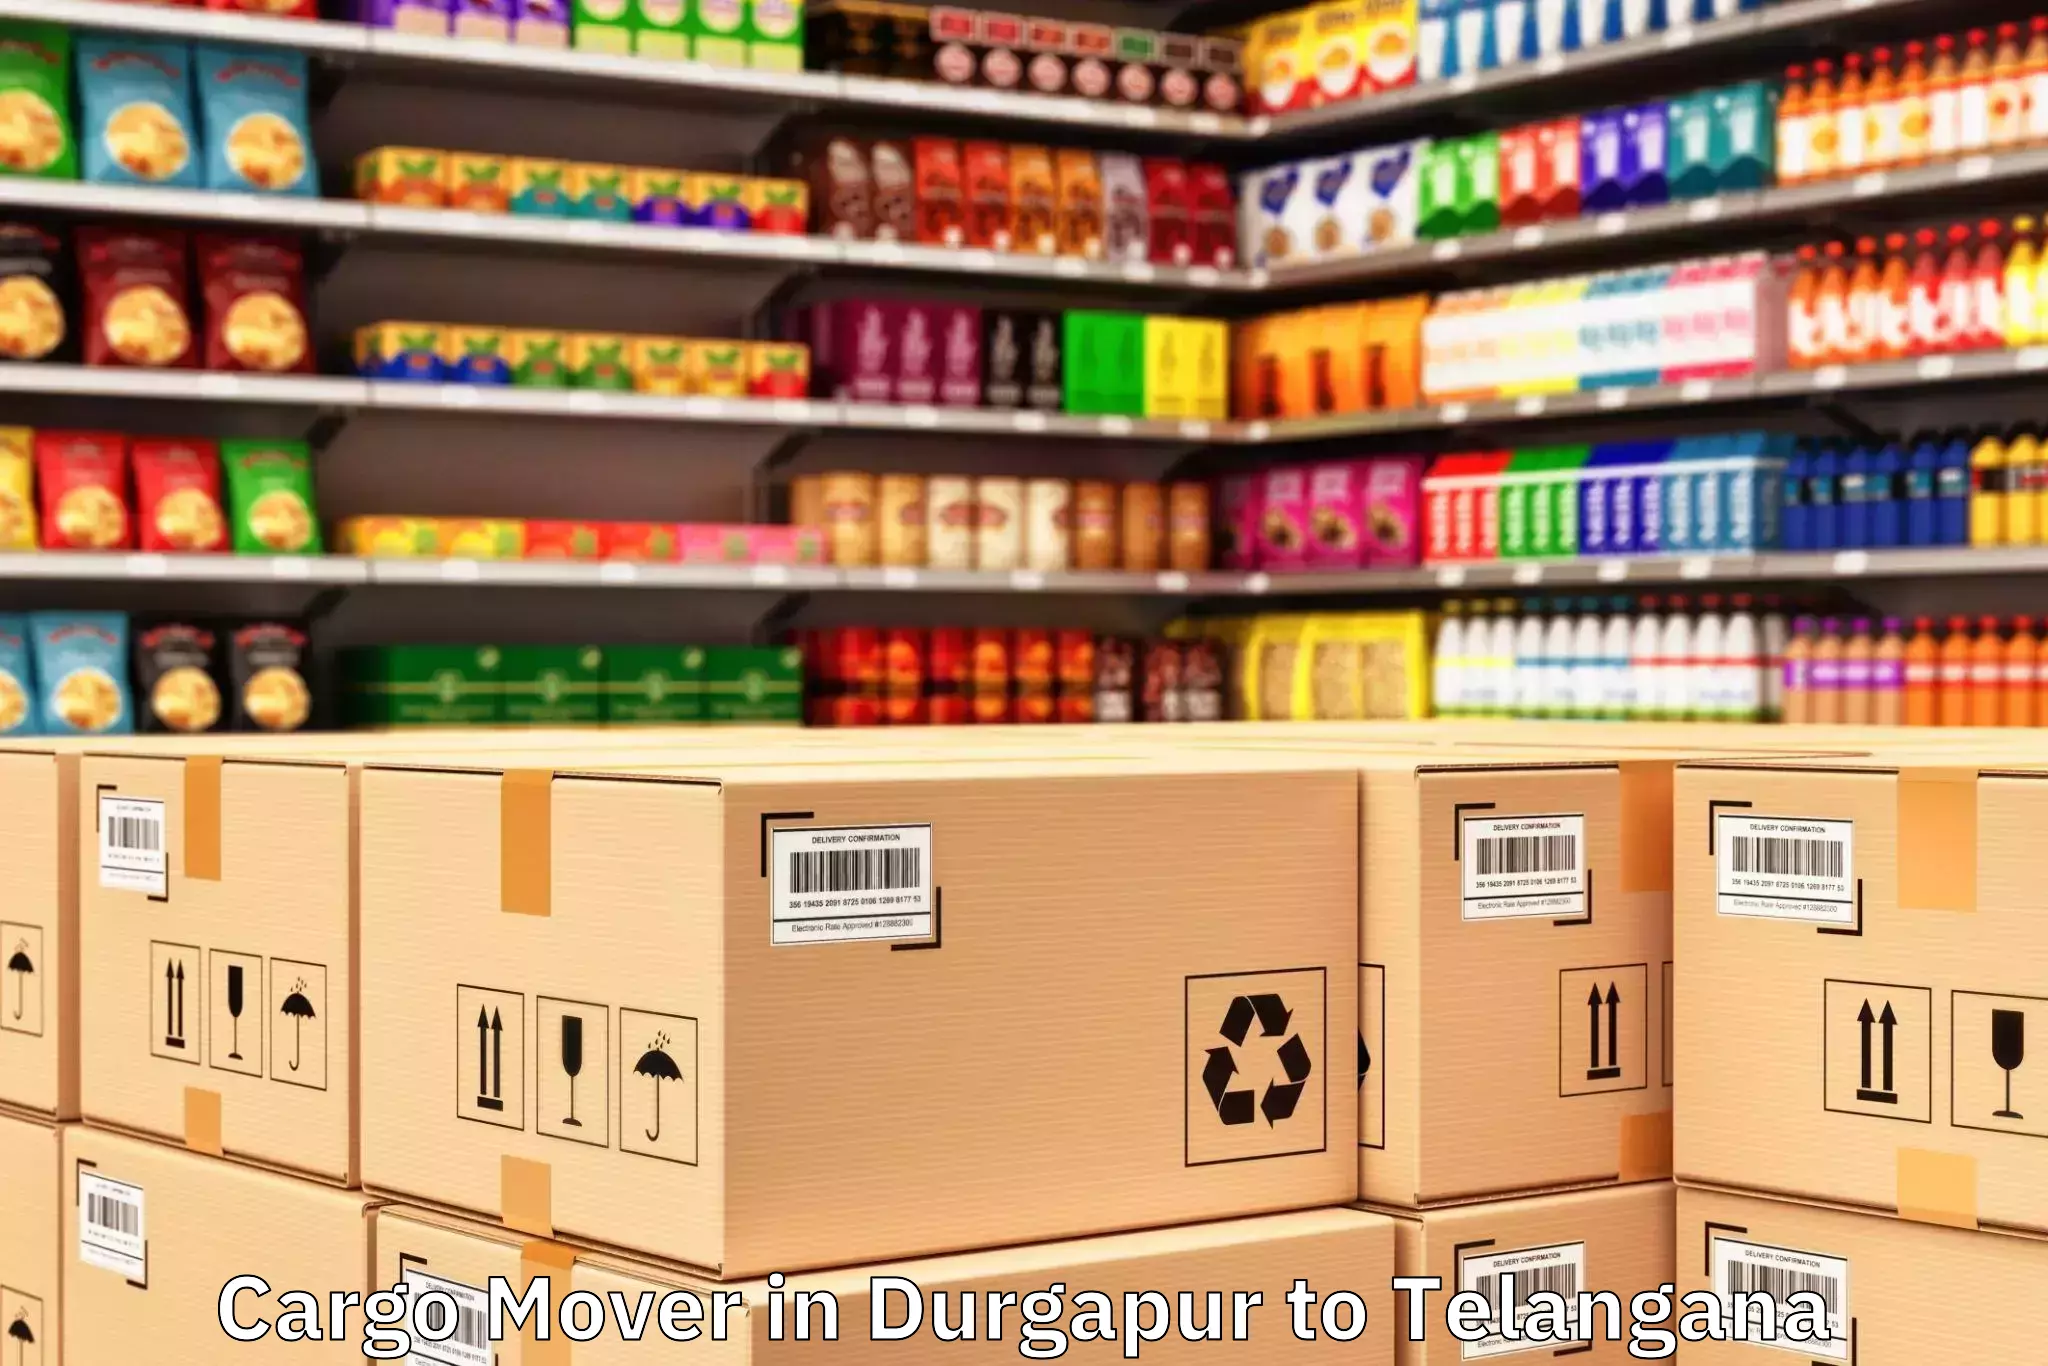 Quality Durgapur to Mangapet Cargo Mover